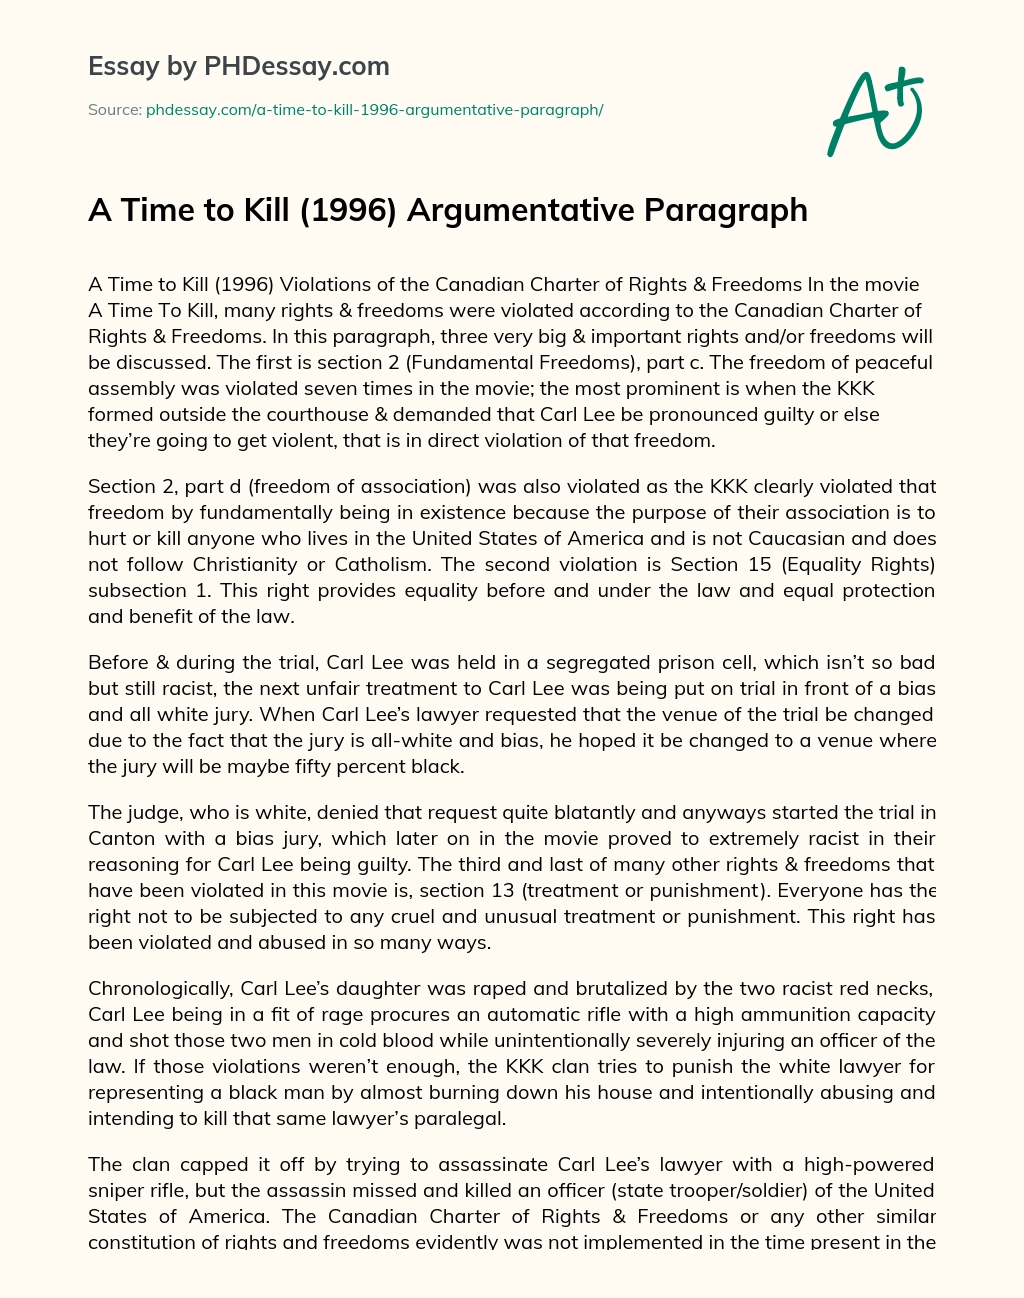 A Time to Kill (1996) Argumentative Paragraph essay